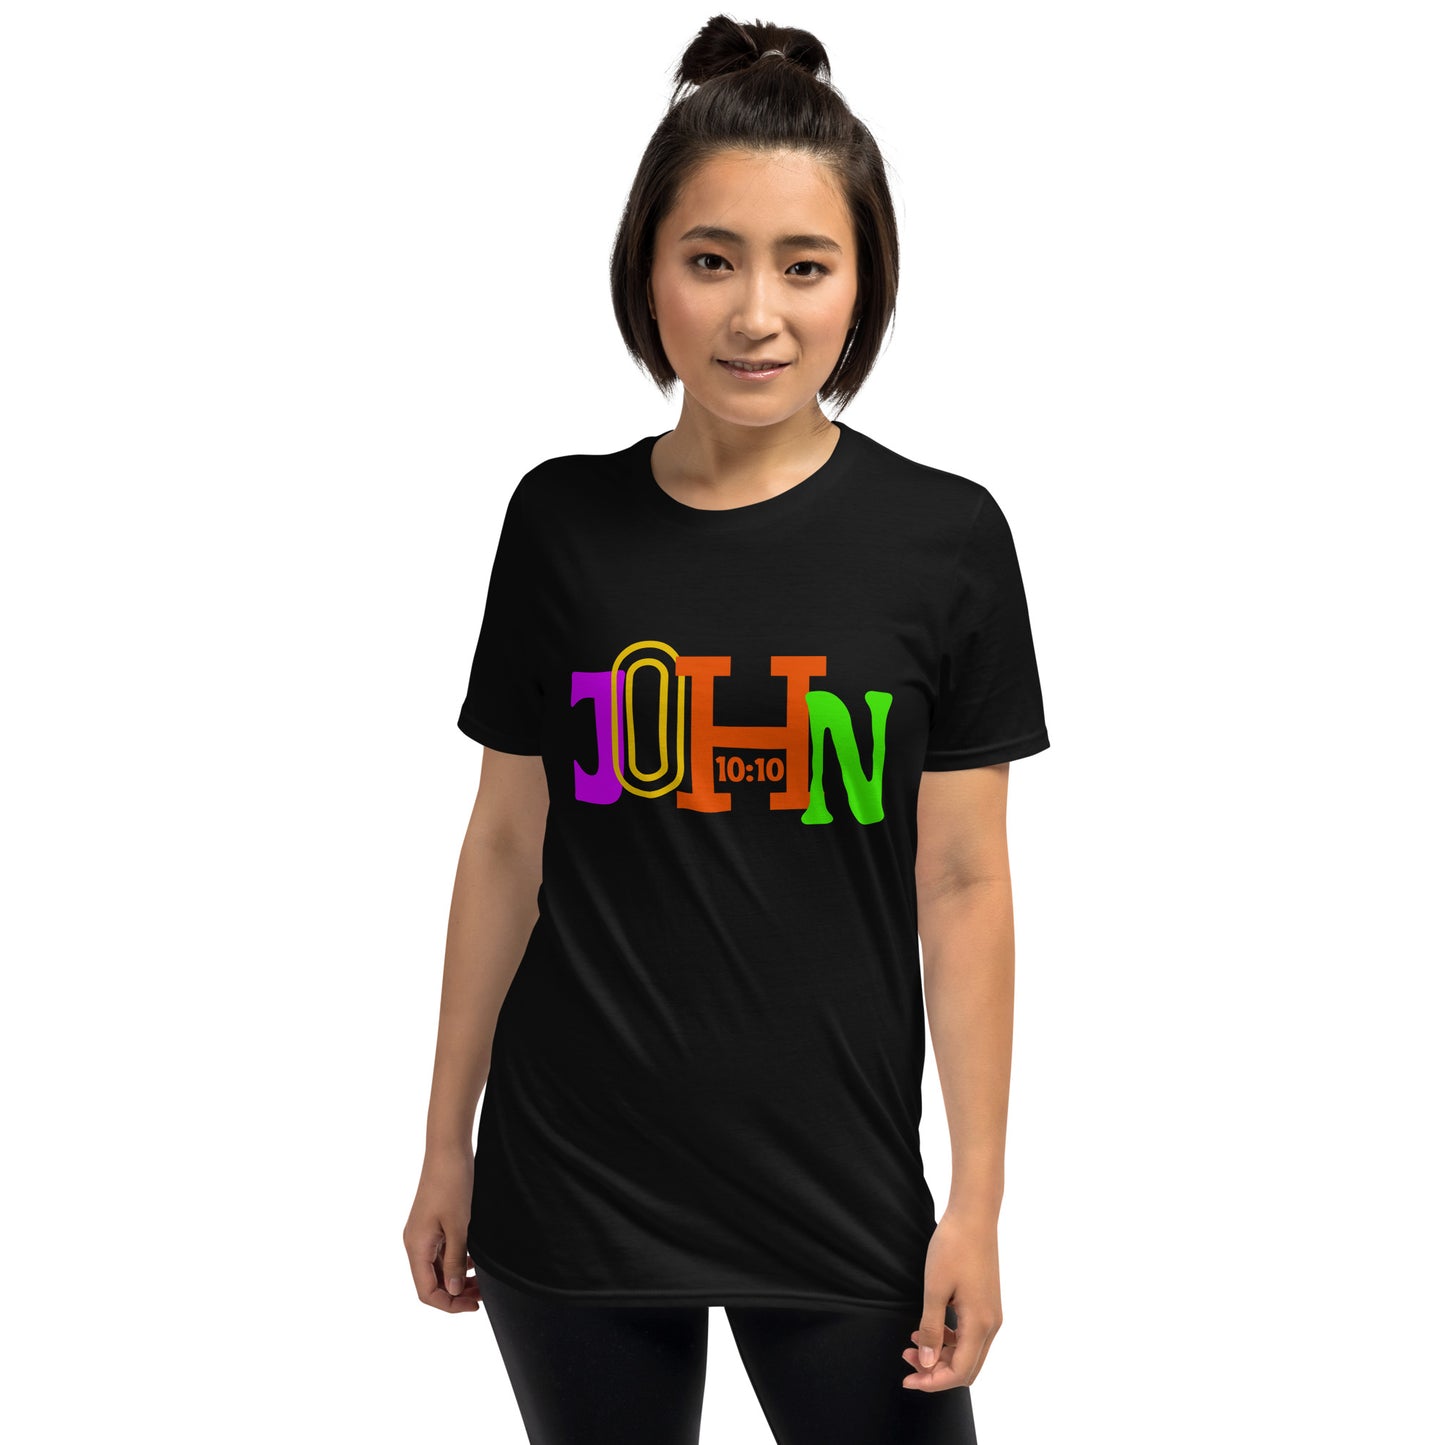 JOHN 10:10 Short-Sleeve Unisex T-Shirt